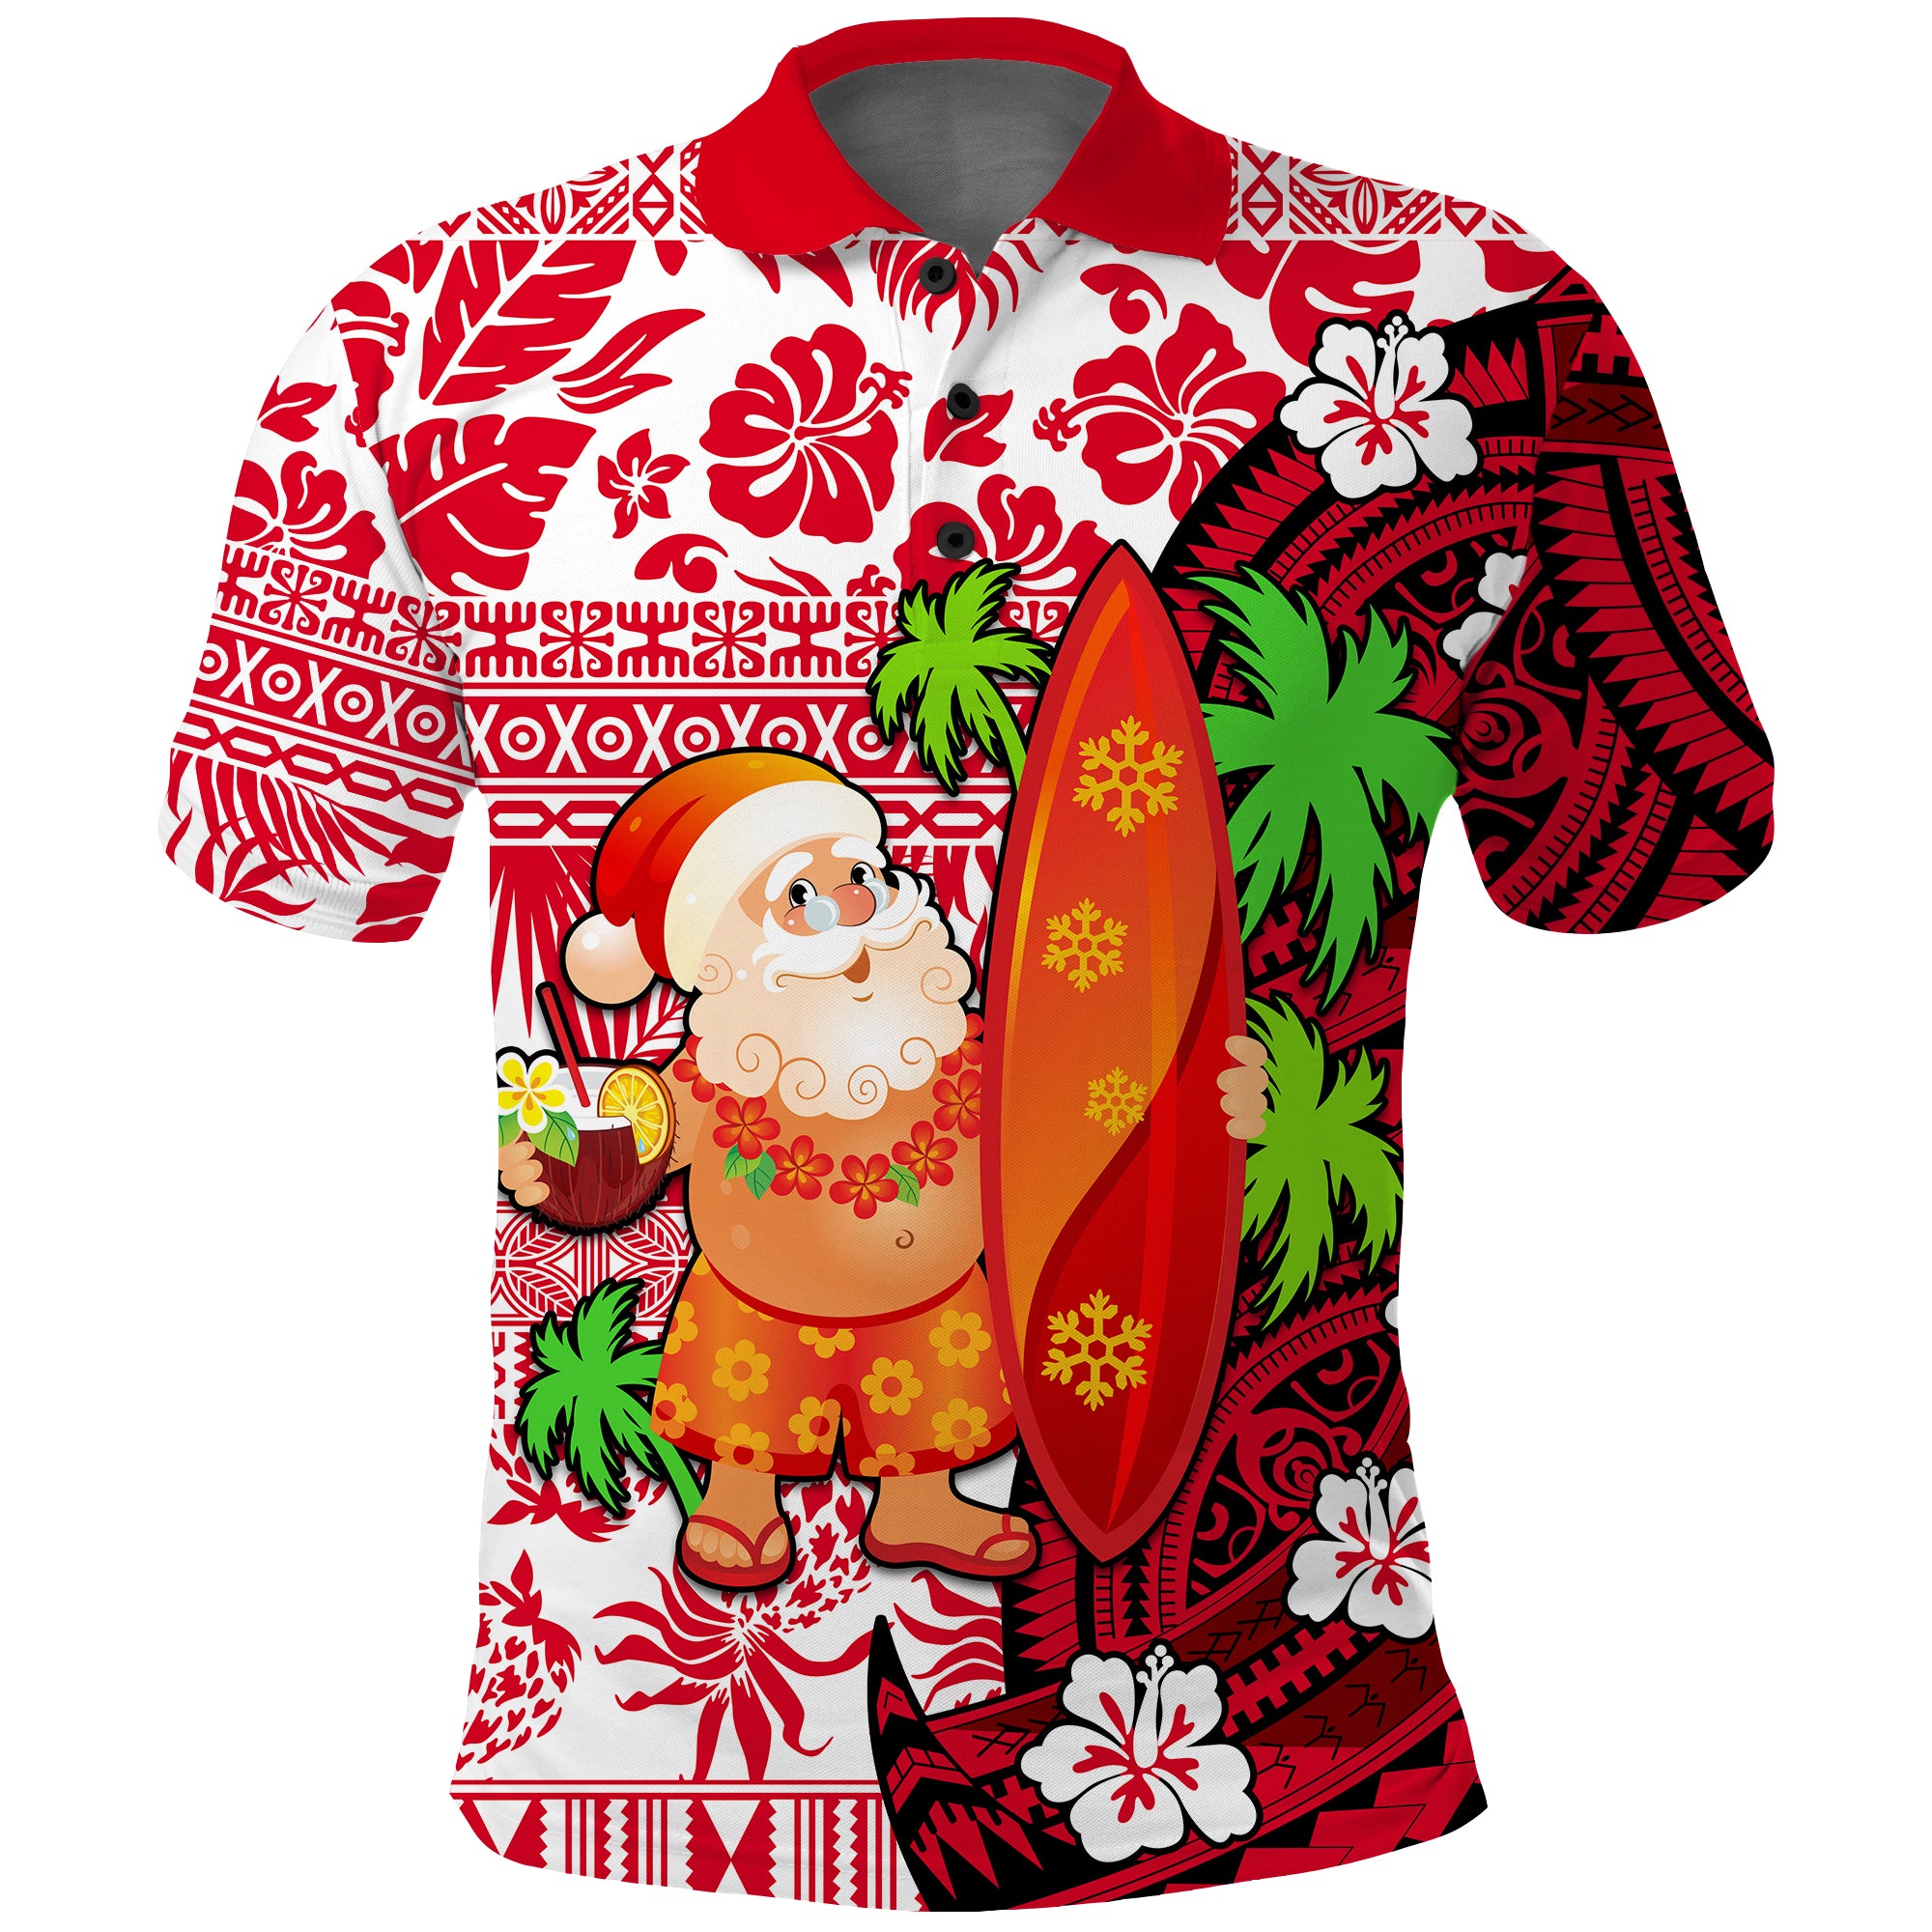 Mele Kalikimaka Polo Shirt Christmas Hawaii with Santa Claus LT13 Unisex Red - Polynesian Pride